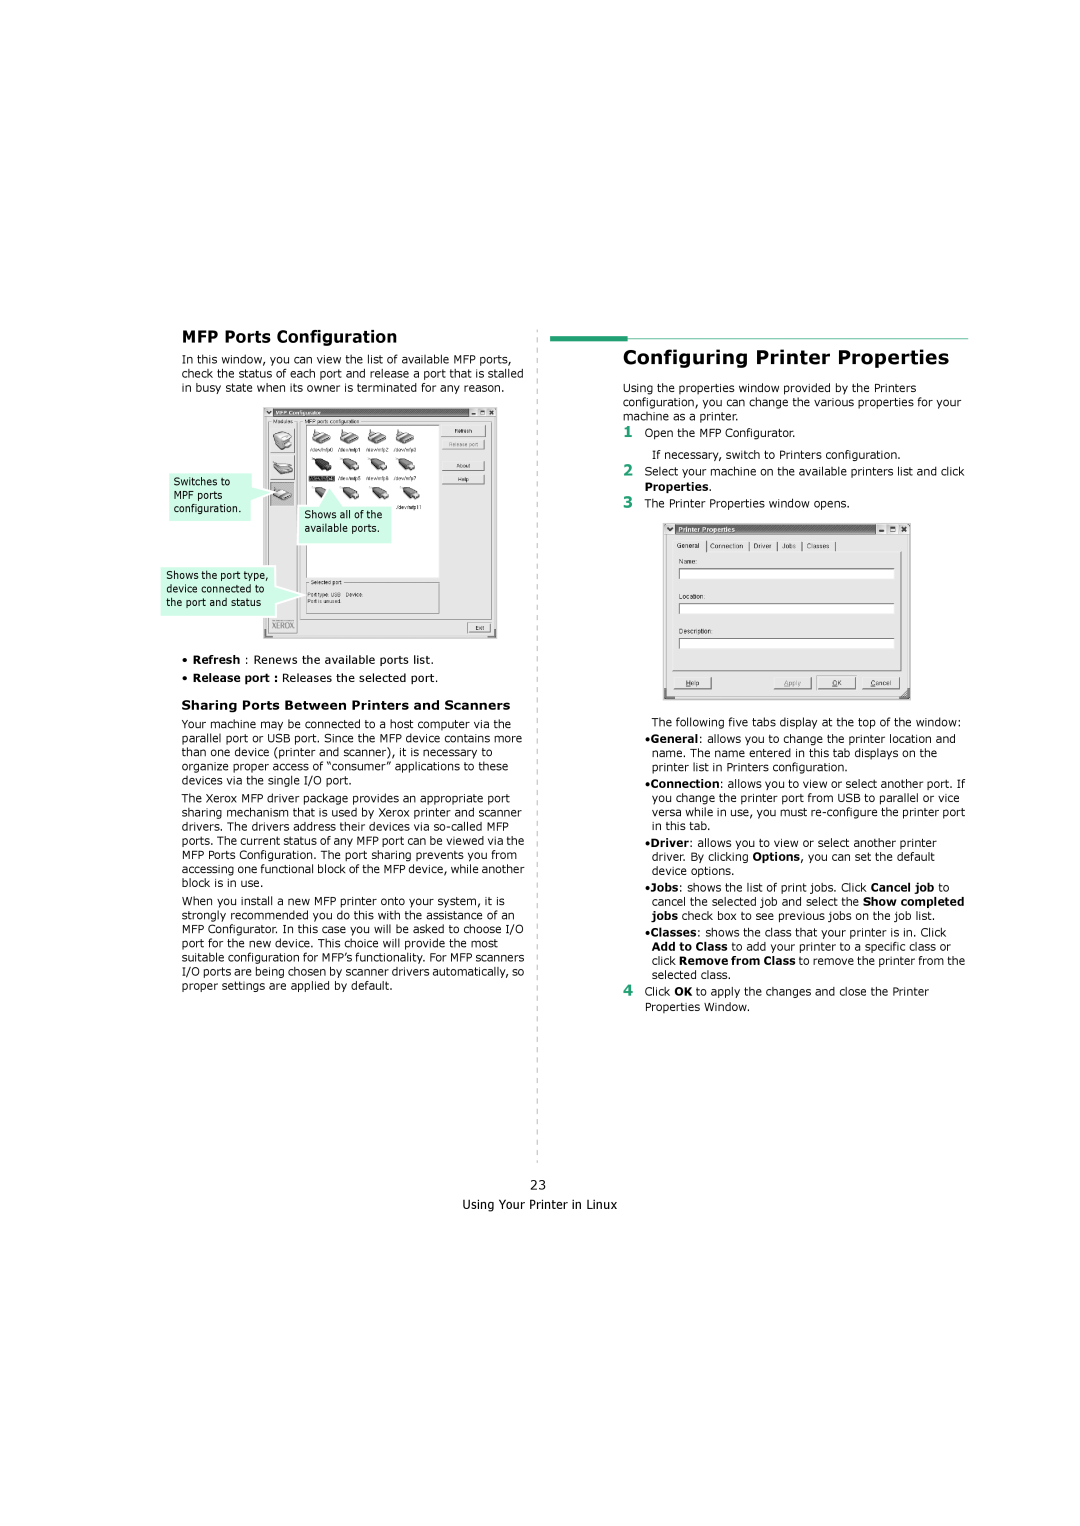 Xerox 3119 manual Configuring Printer Properties, MFP Ports Configuration 